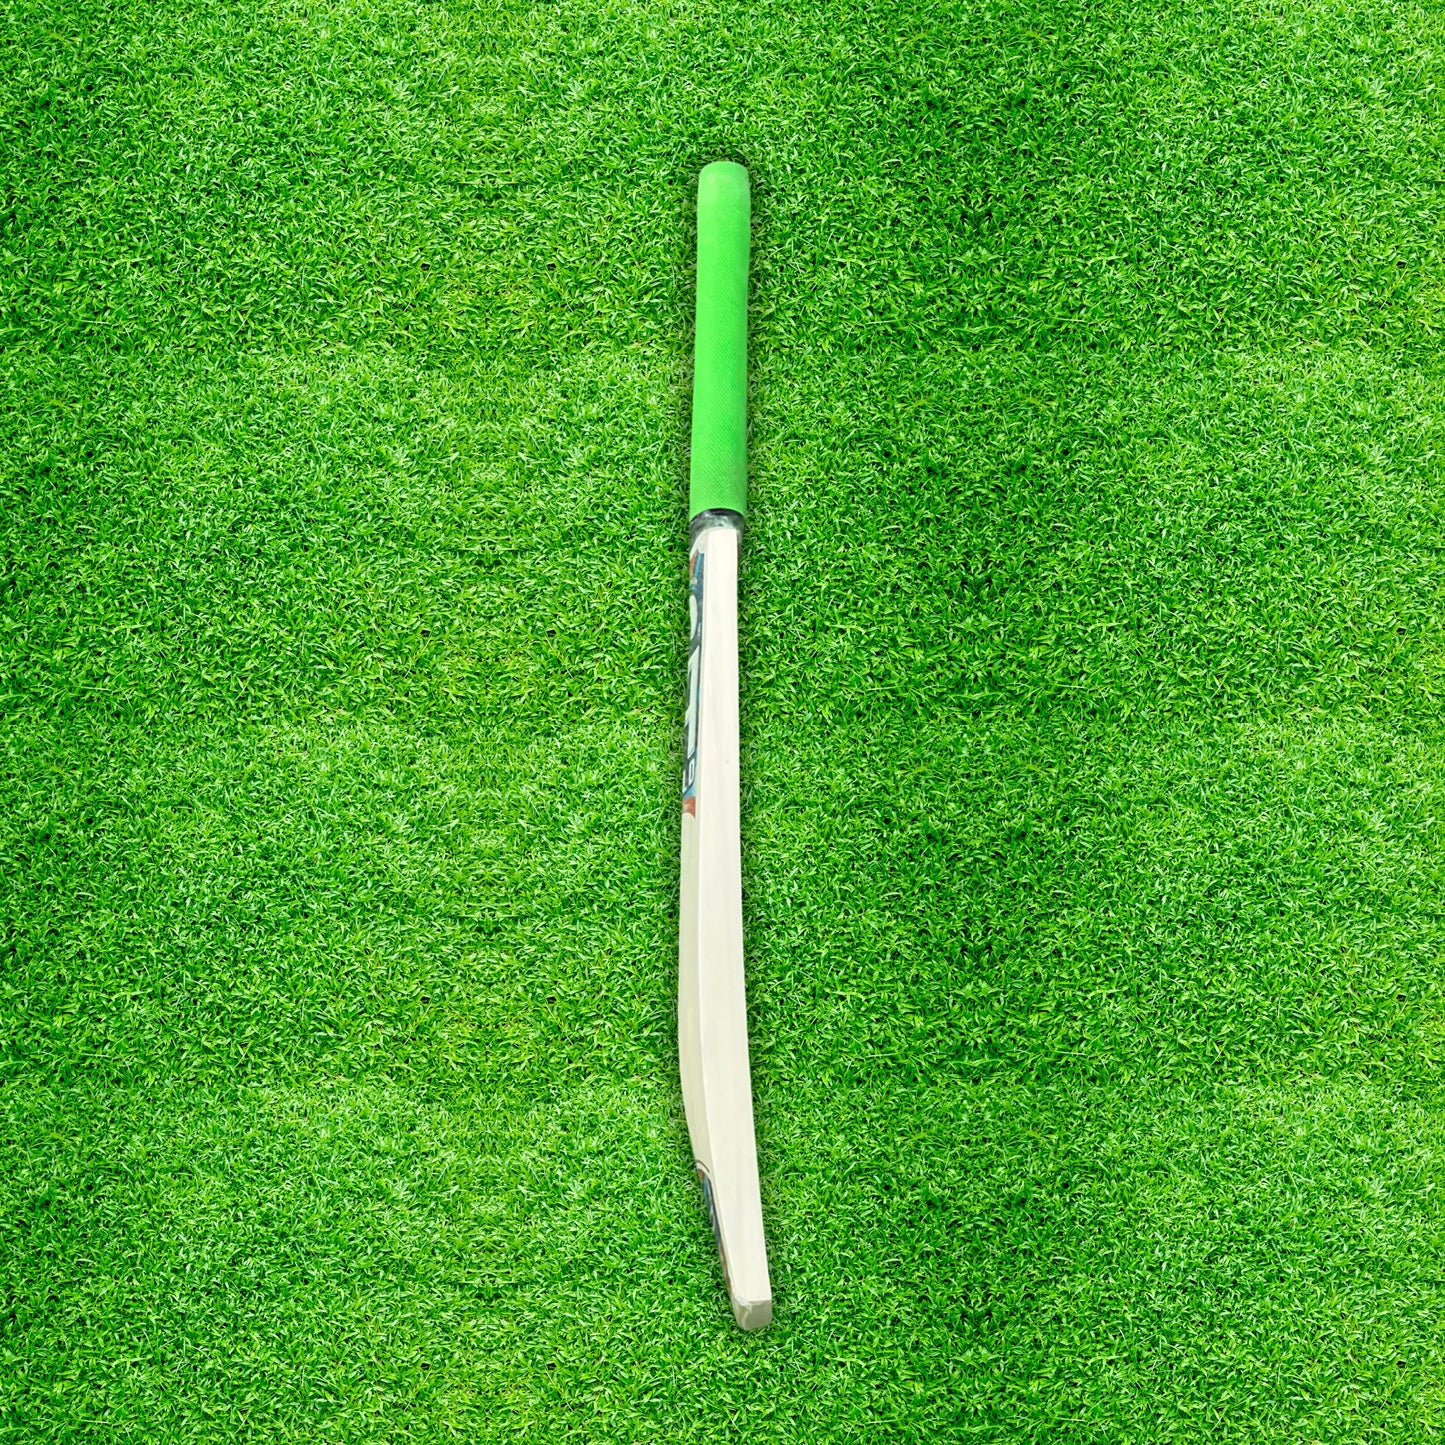 CA Gold Numberi Poplar Willow Soft Tennis Ball Cricket Bat Junior Size 1 - 6 (One to Six)